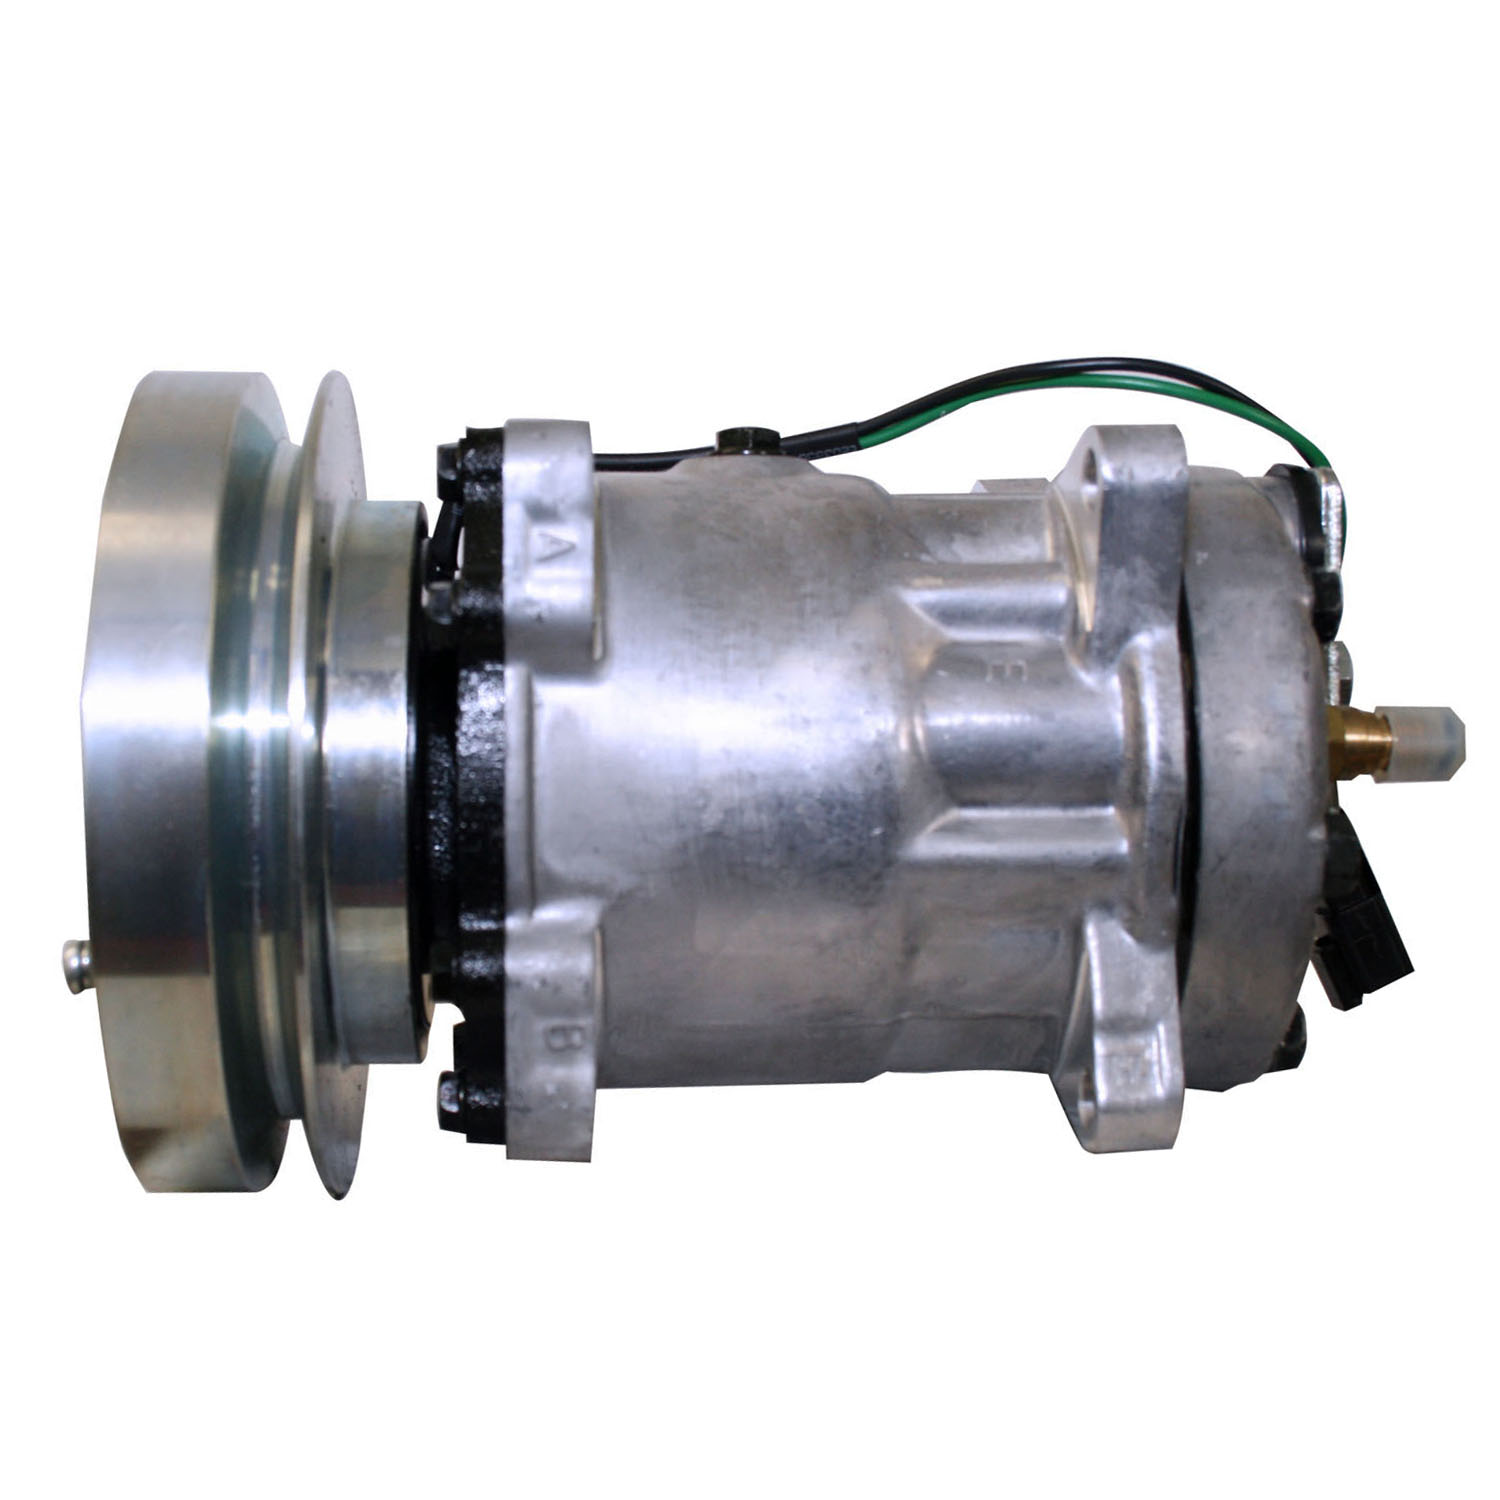 TCW Compressor 40573.105NEW New Product Image field_60b6a13a6e67c